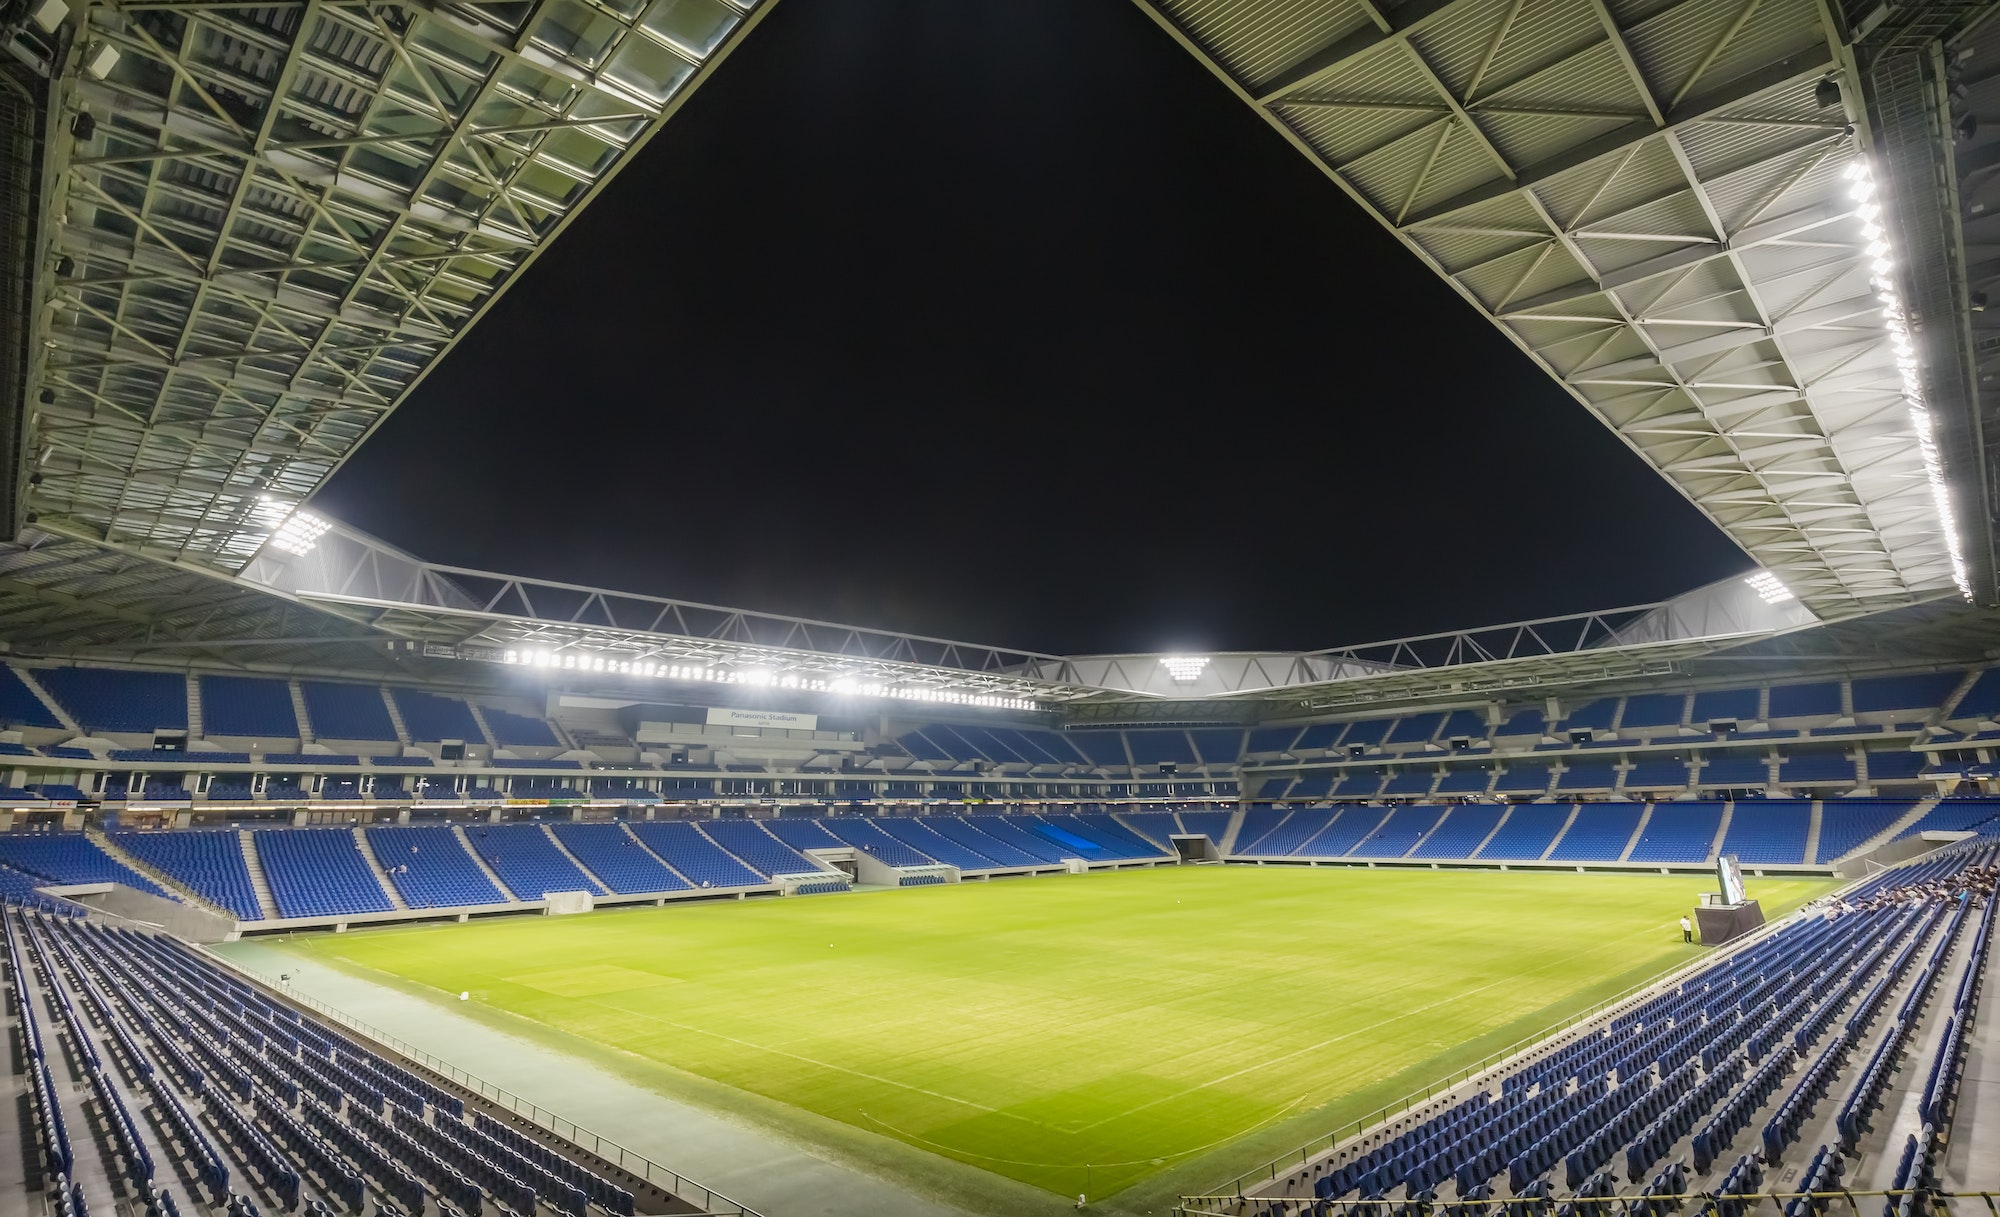 Night view of football stadium in Japan